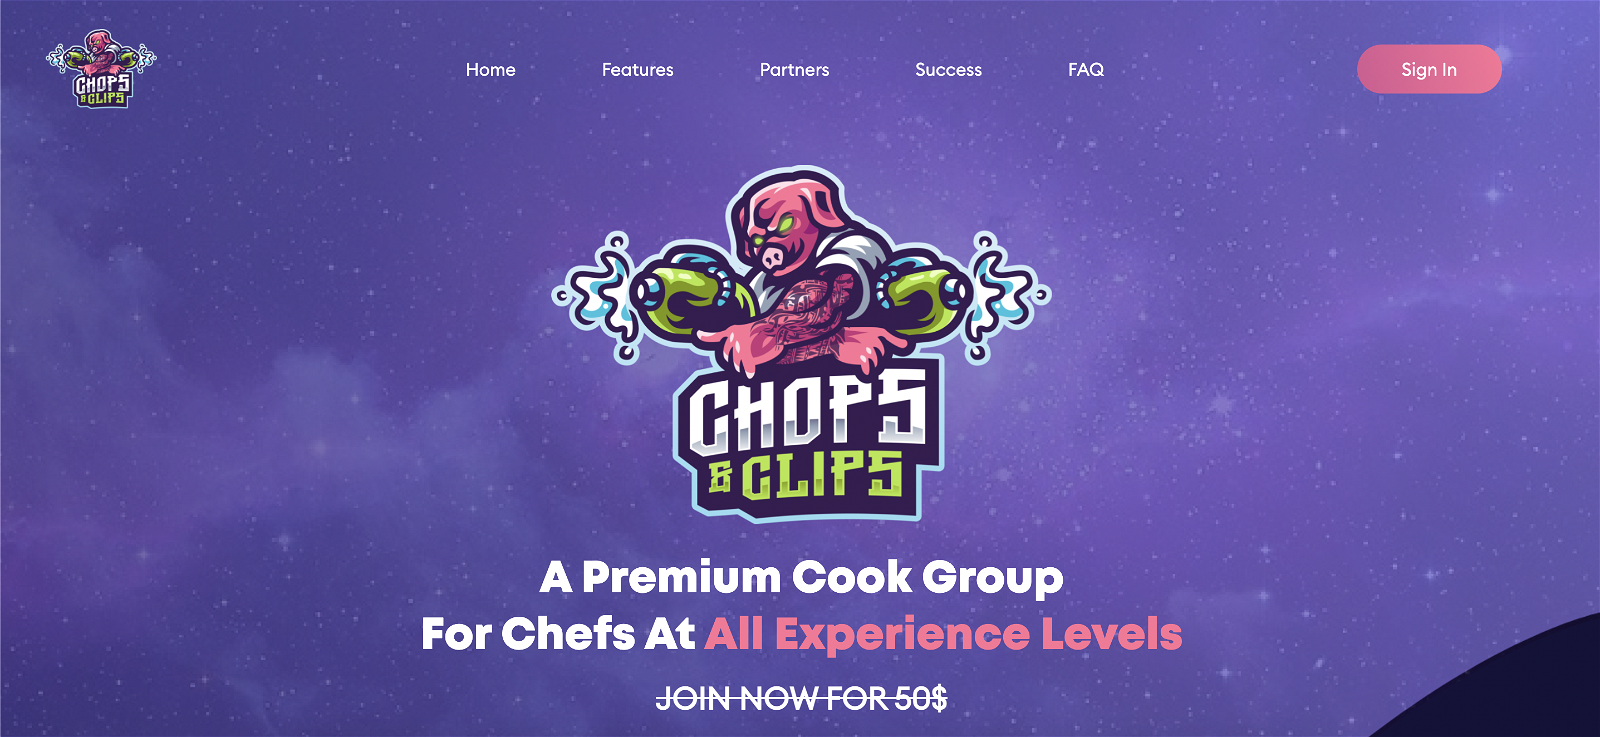 Chops & Clips cook group presentation banner